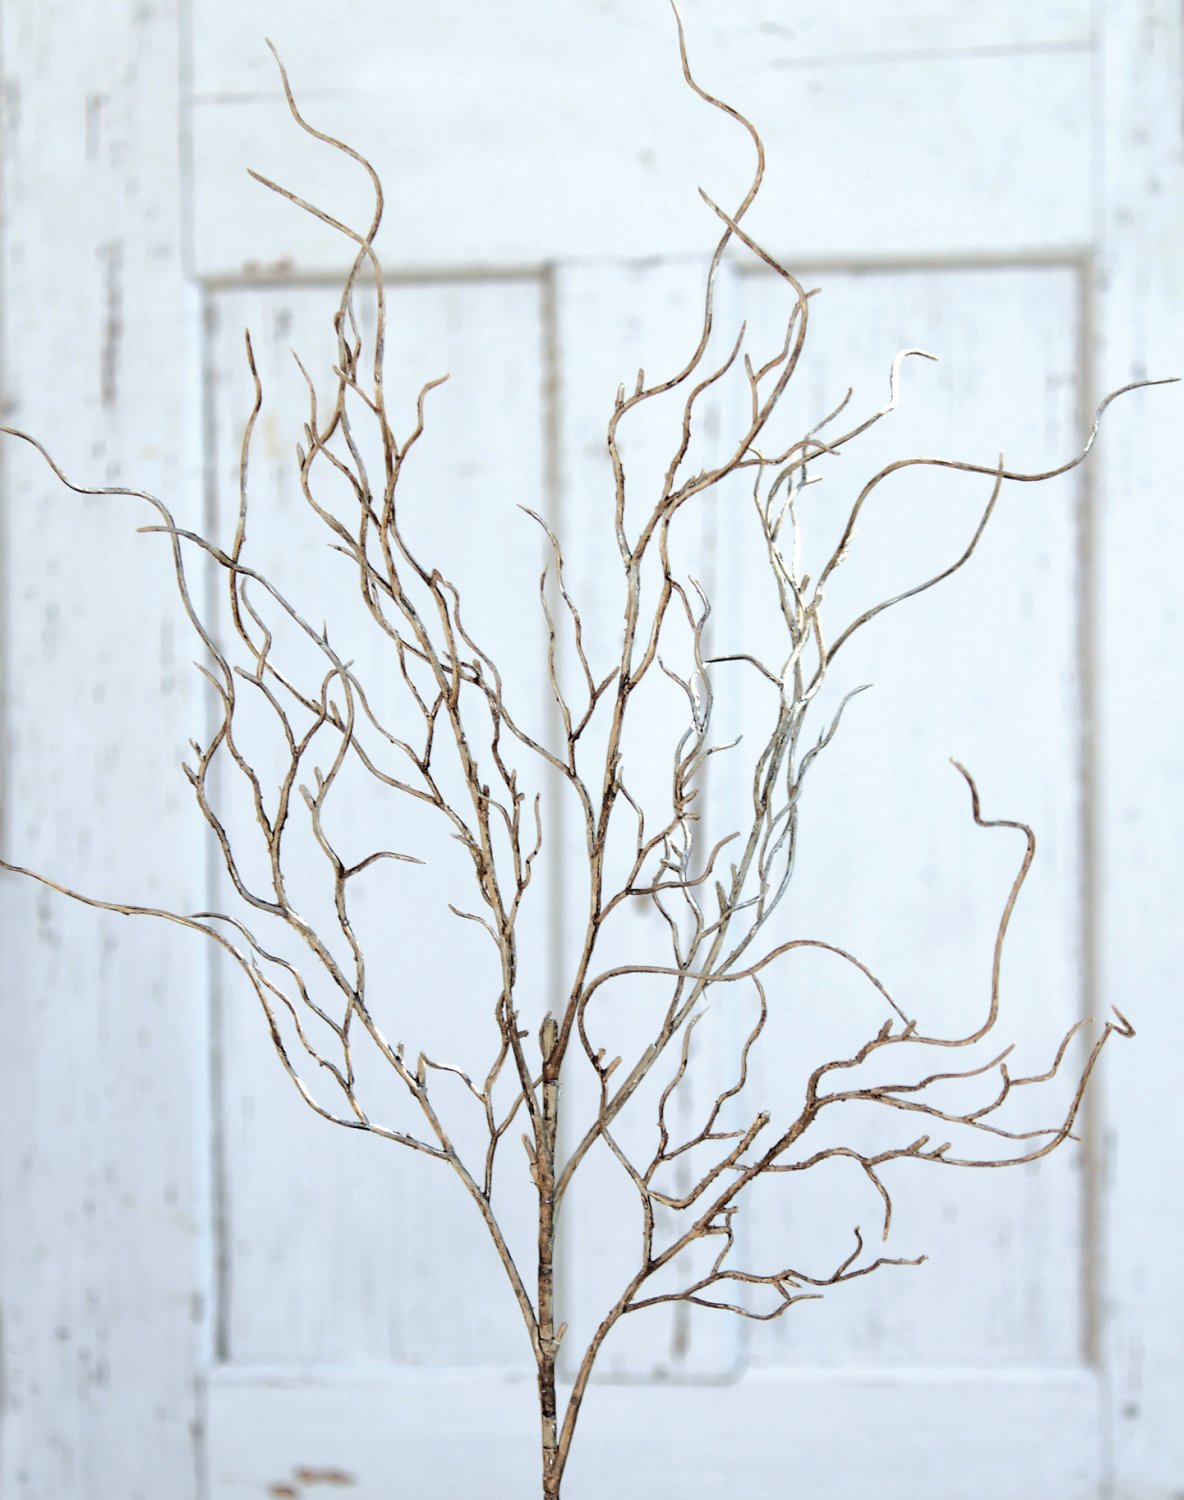 Plastic willow stem, 66 cm, natural